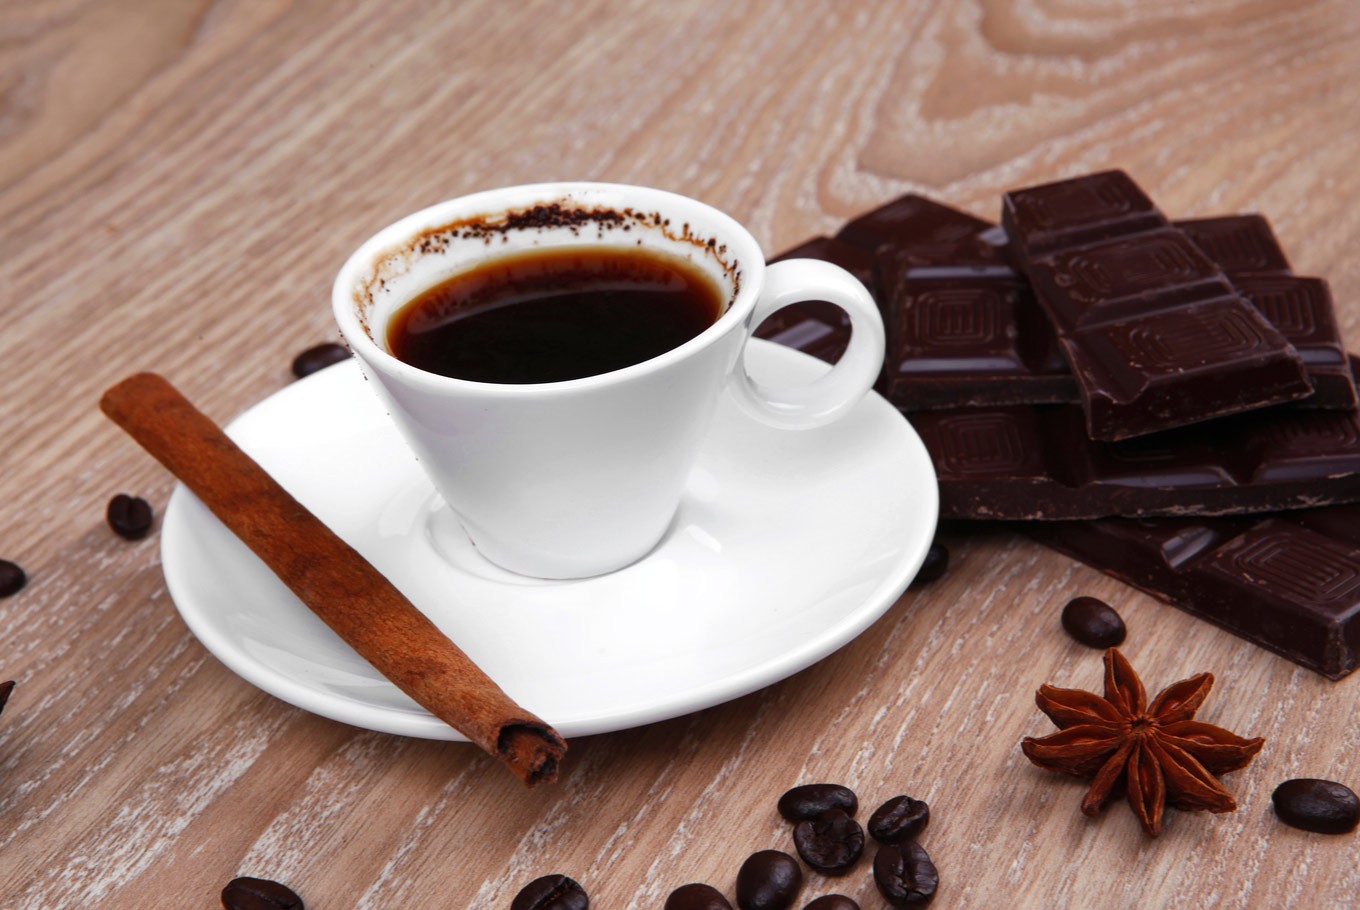 Black coffee and dark chocolate: Enjoying the after taste - Food